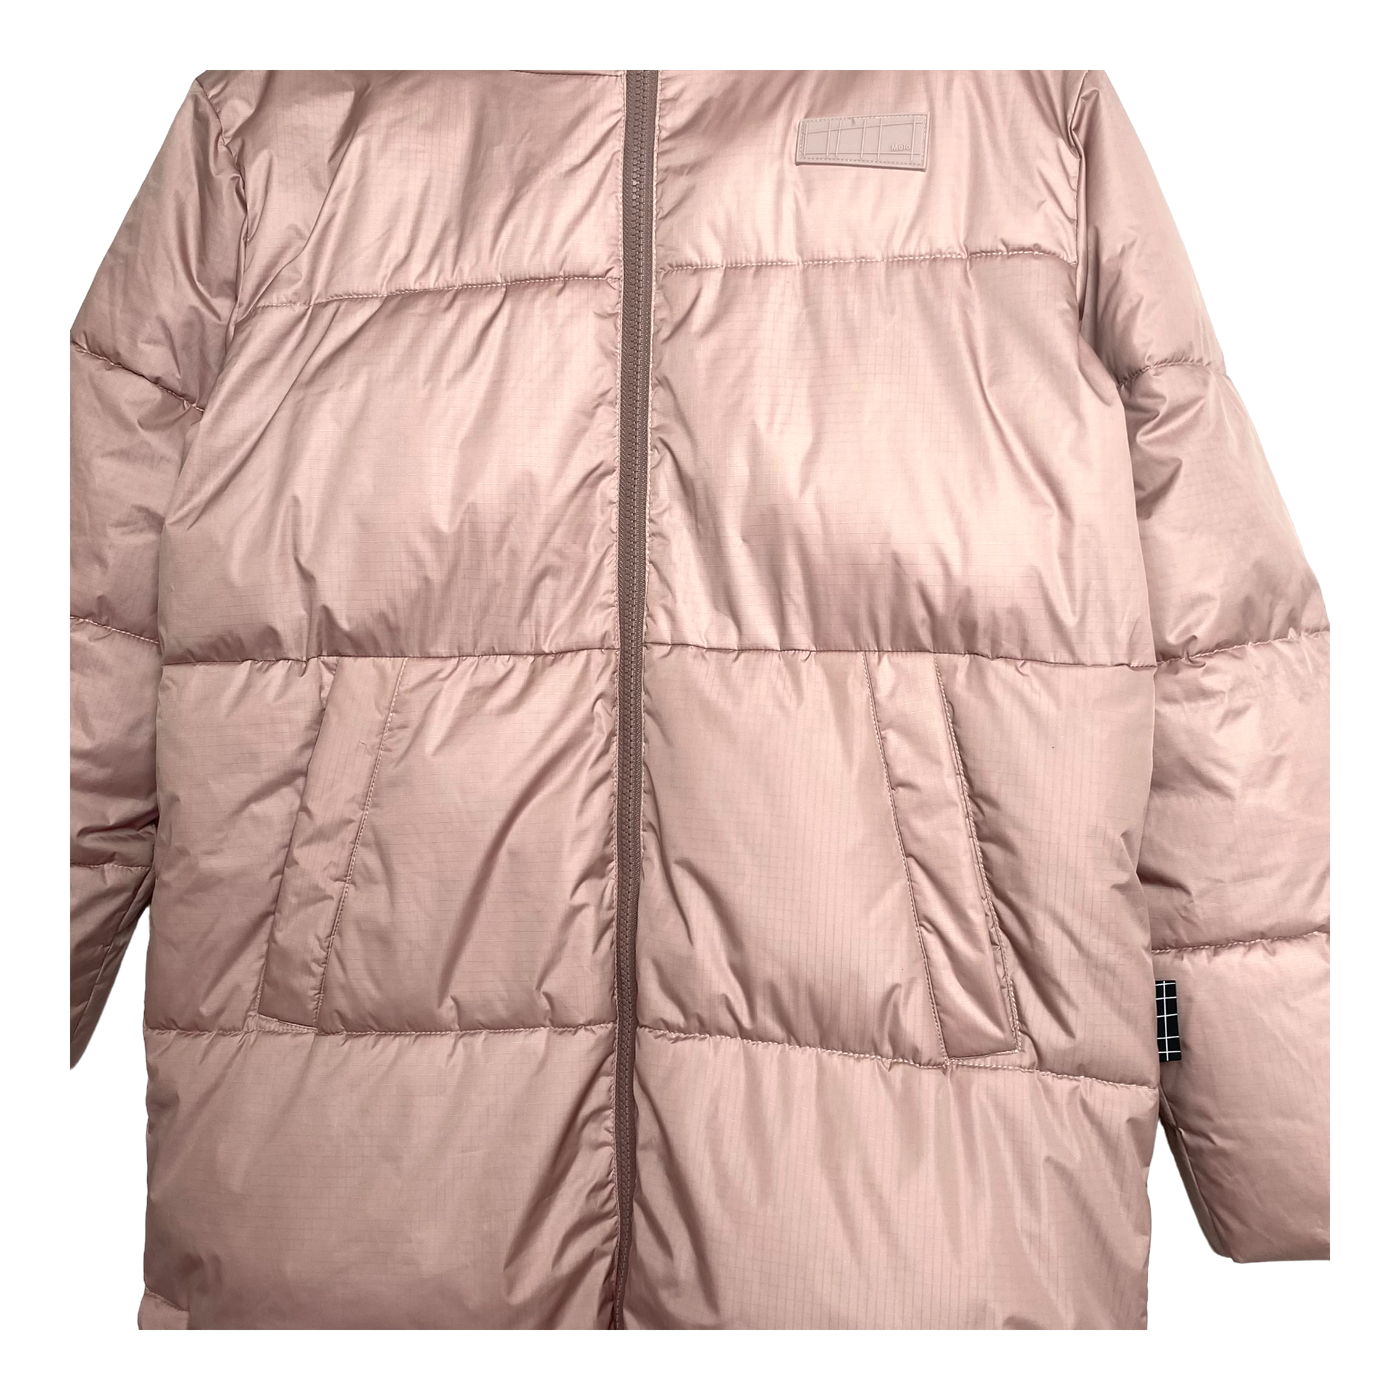 Molo harper winter jacket, pink | 152cm